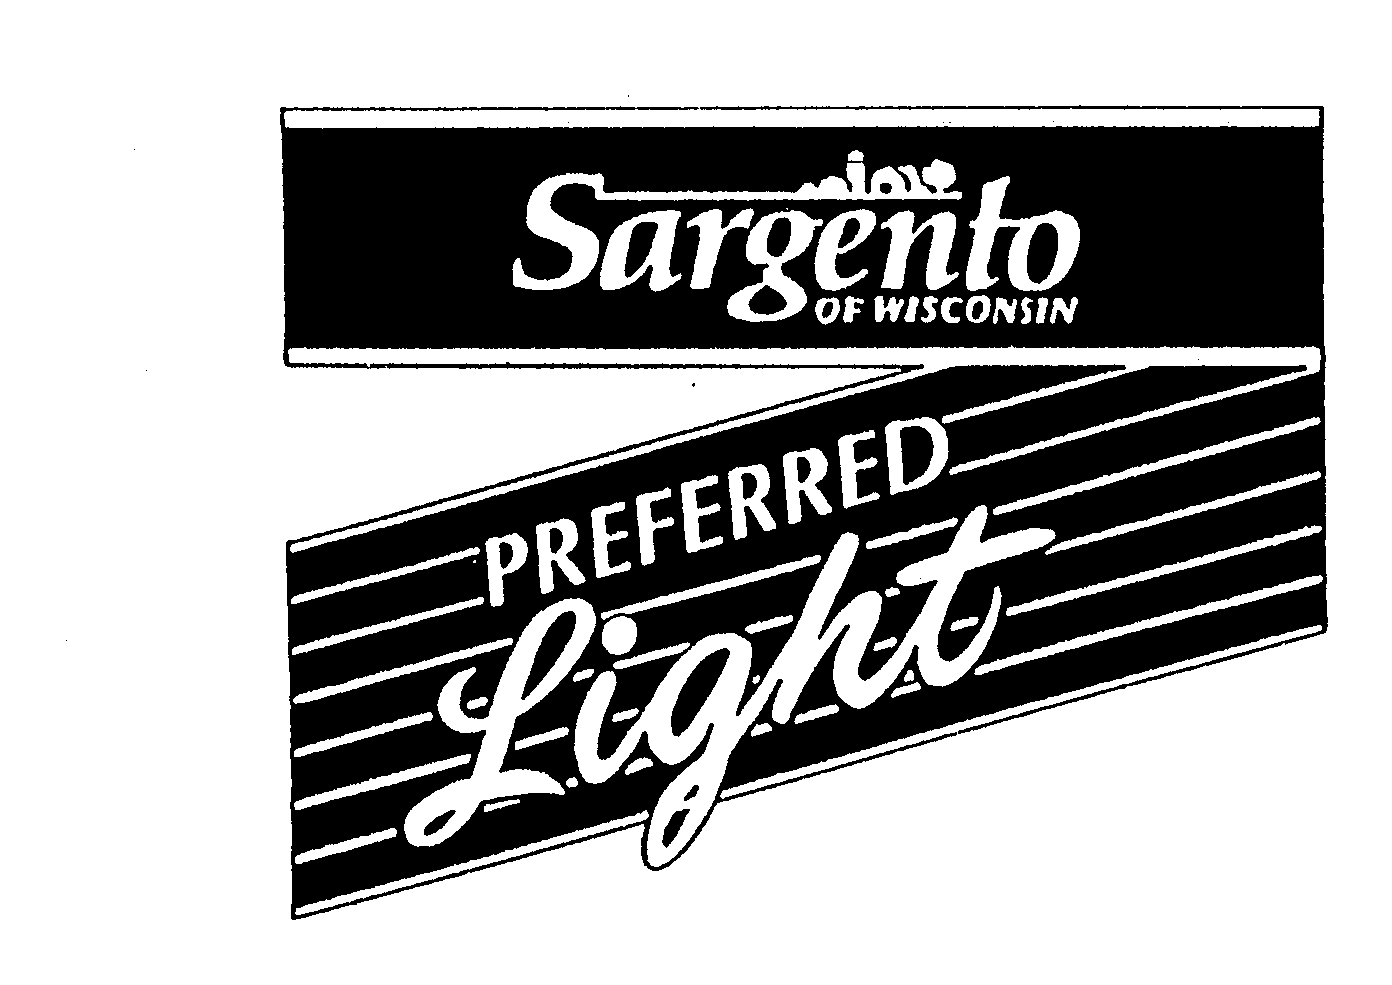  SARGENTO OF WISCONSIN PREFERRED LIGHT